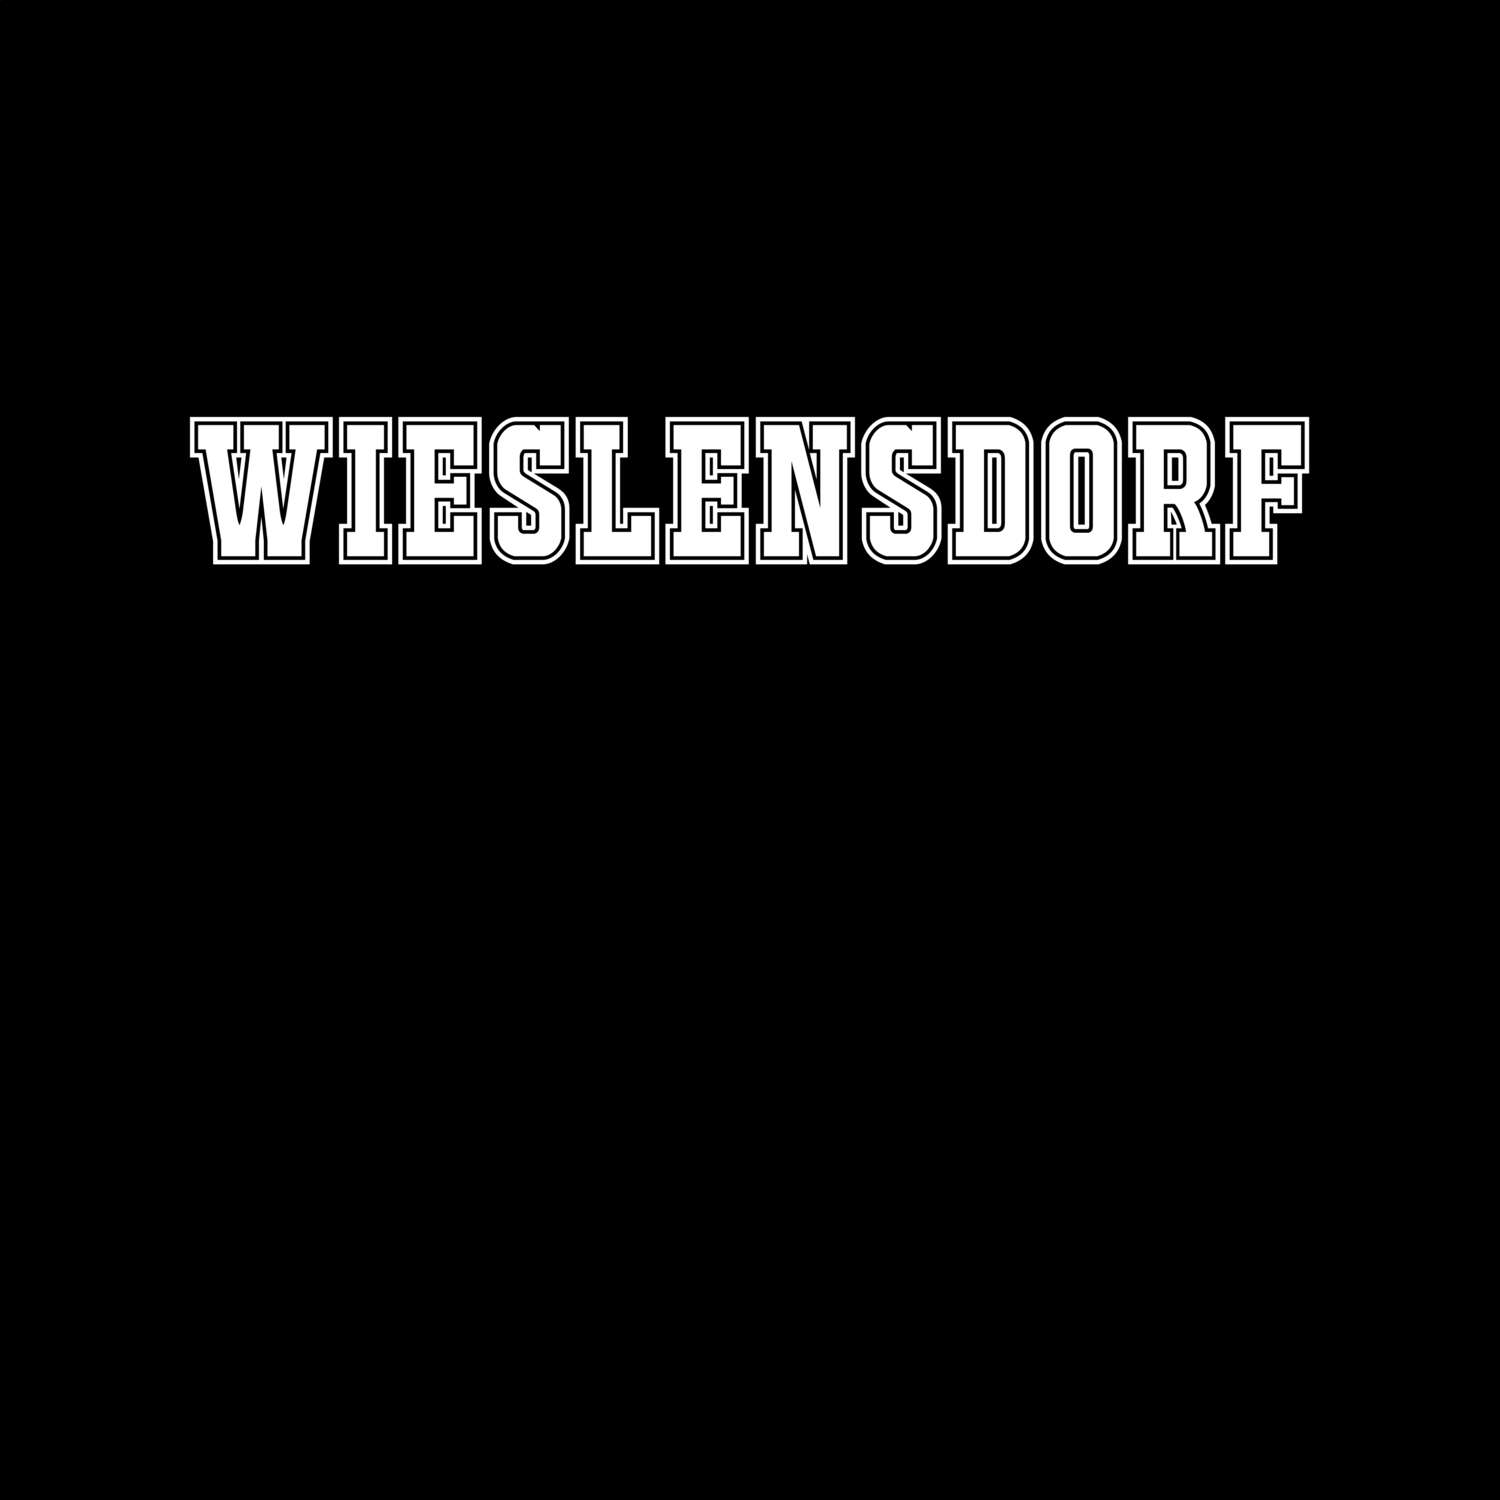 Wieslensdorf T-Shirt »Classic«